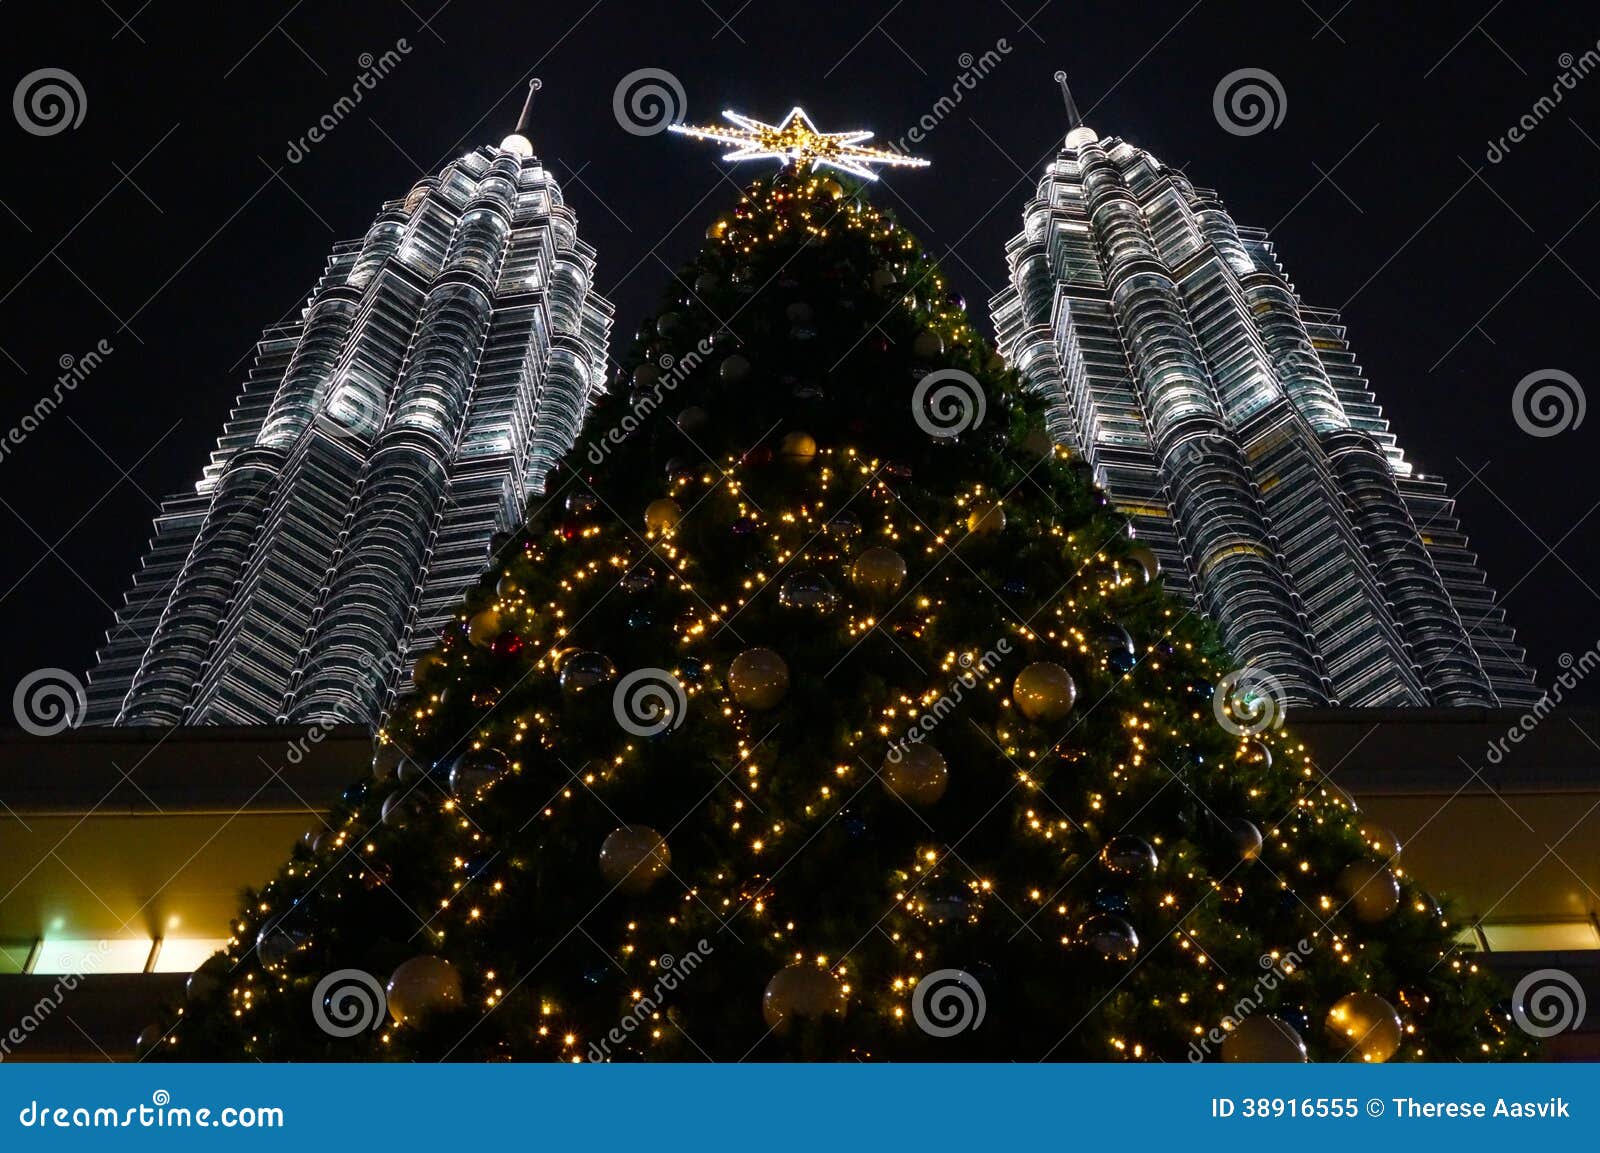 Christmas in Kuala Lumpur. An enormous Christmas tree adorns the entrance to the Suria KLCC shopping mall at the base of the Petrona Towers, Kuala Lumpur, Malaysia.